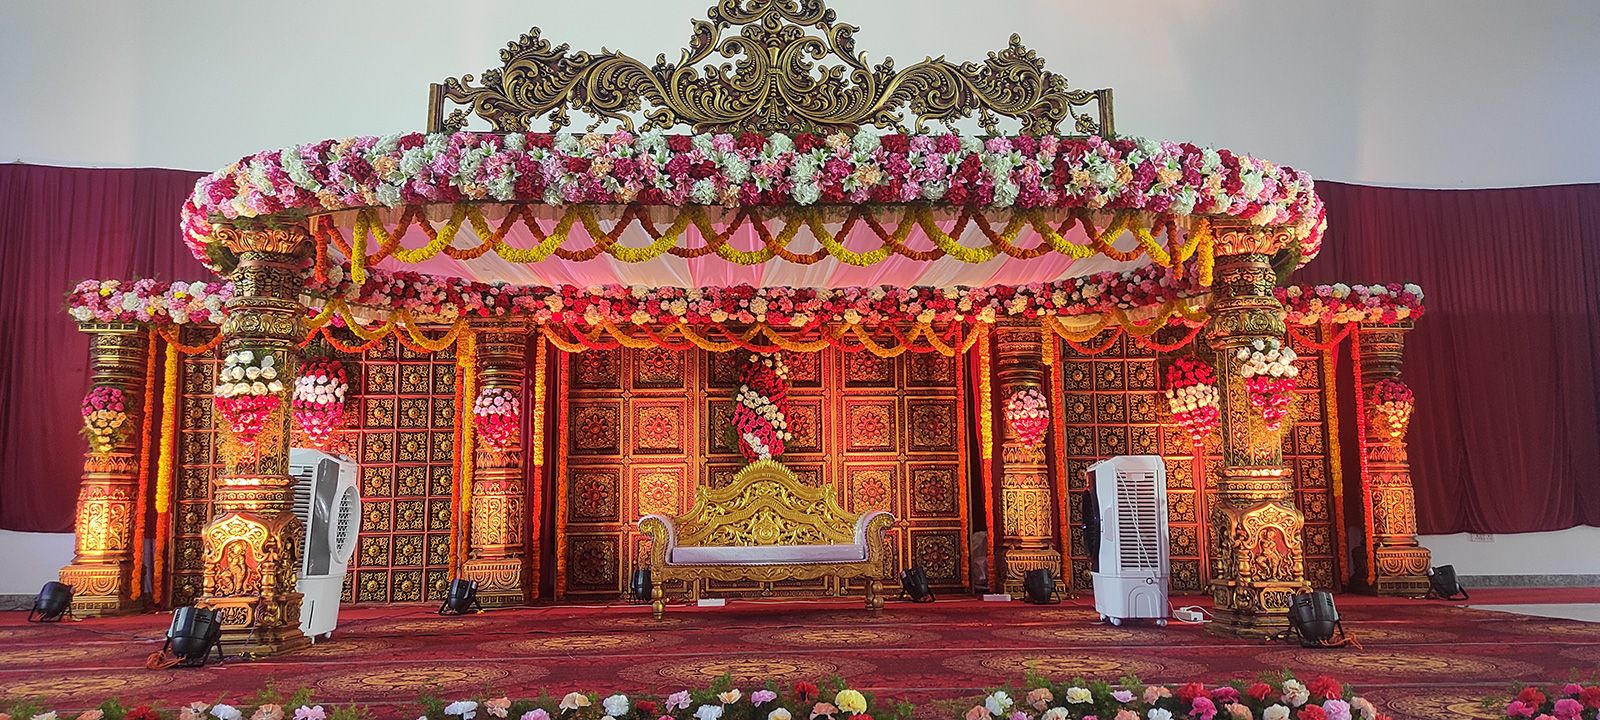 hindu wedding Mantapa decoration images